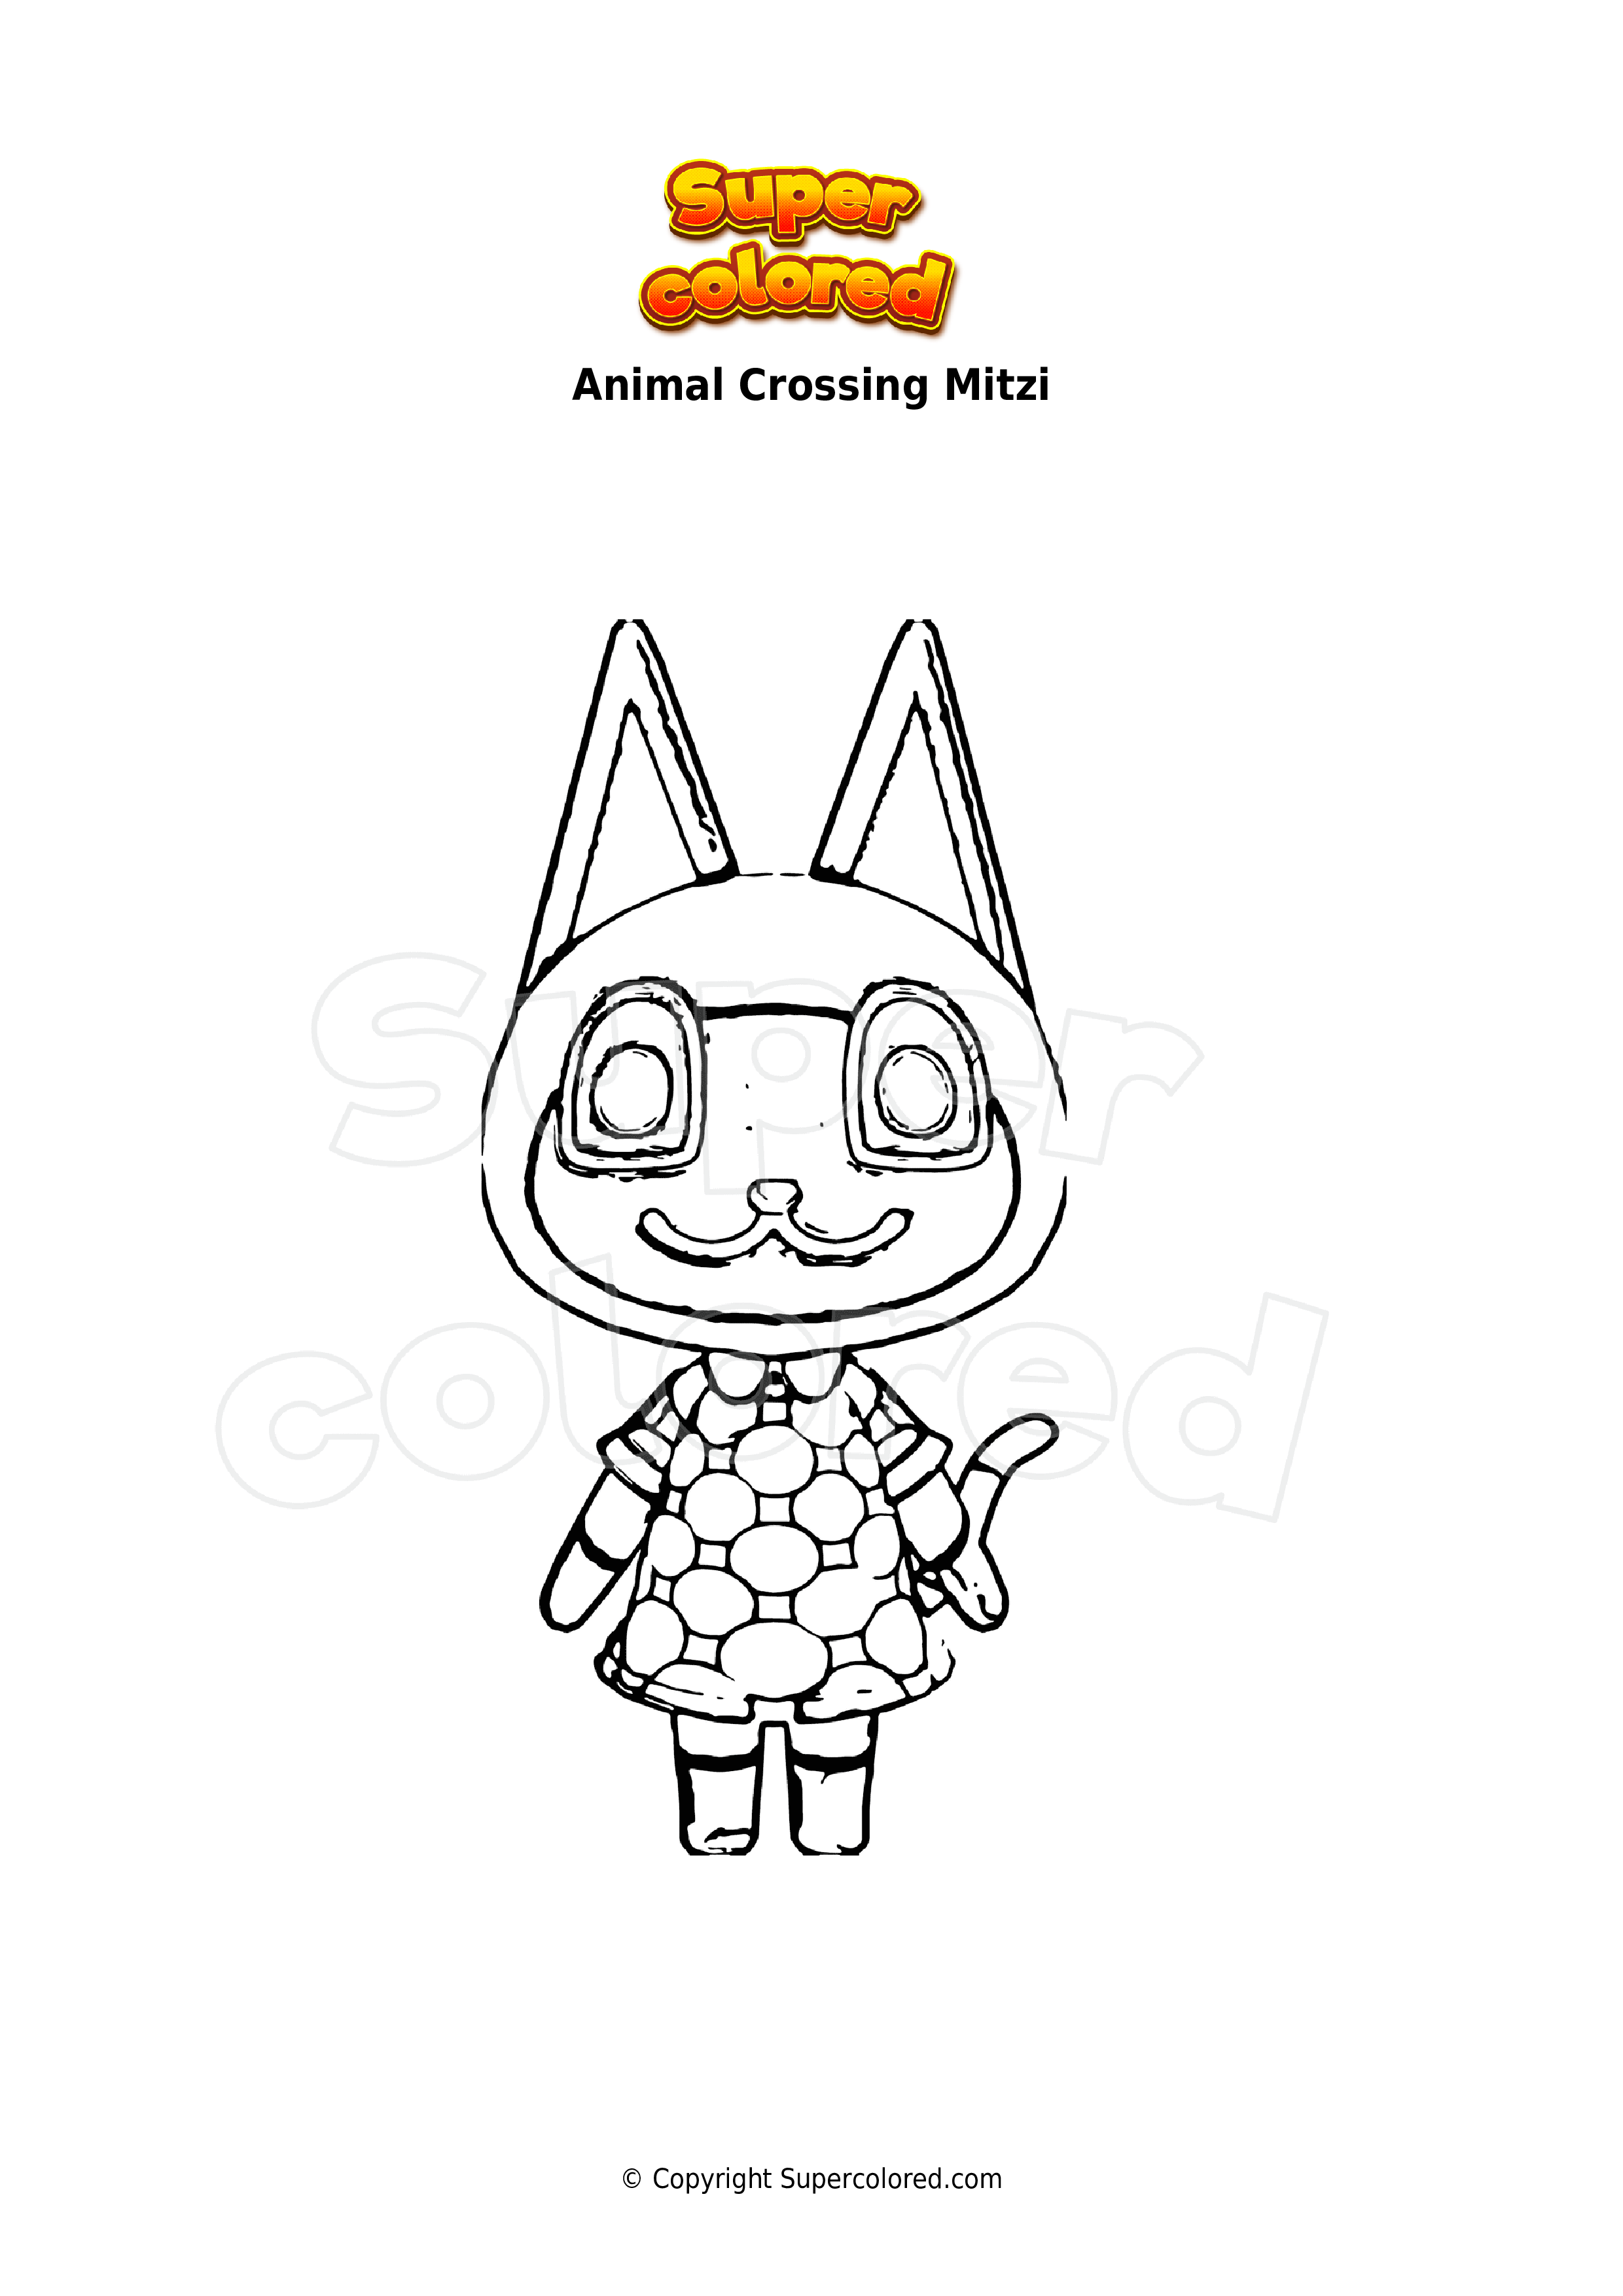 Coloring page Animal Crossing Mitzi 